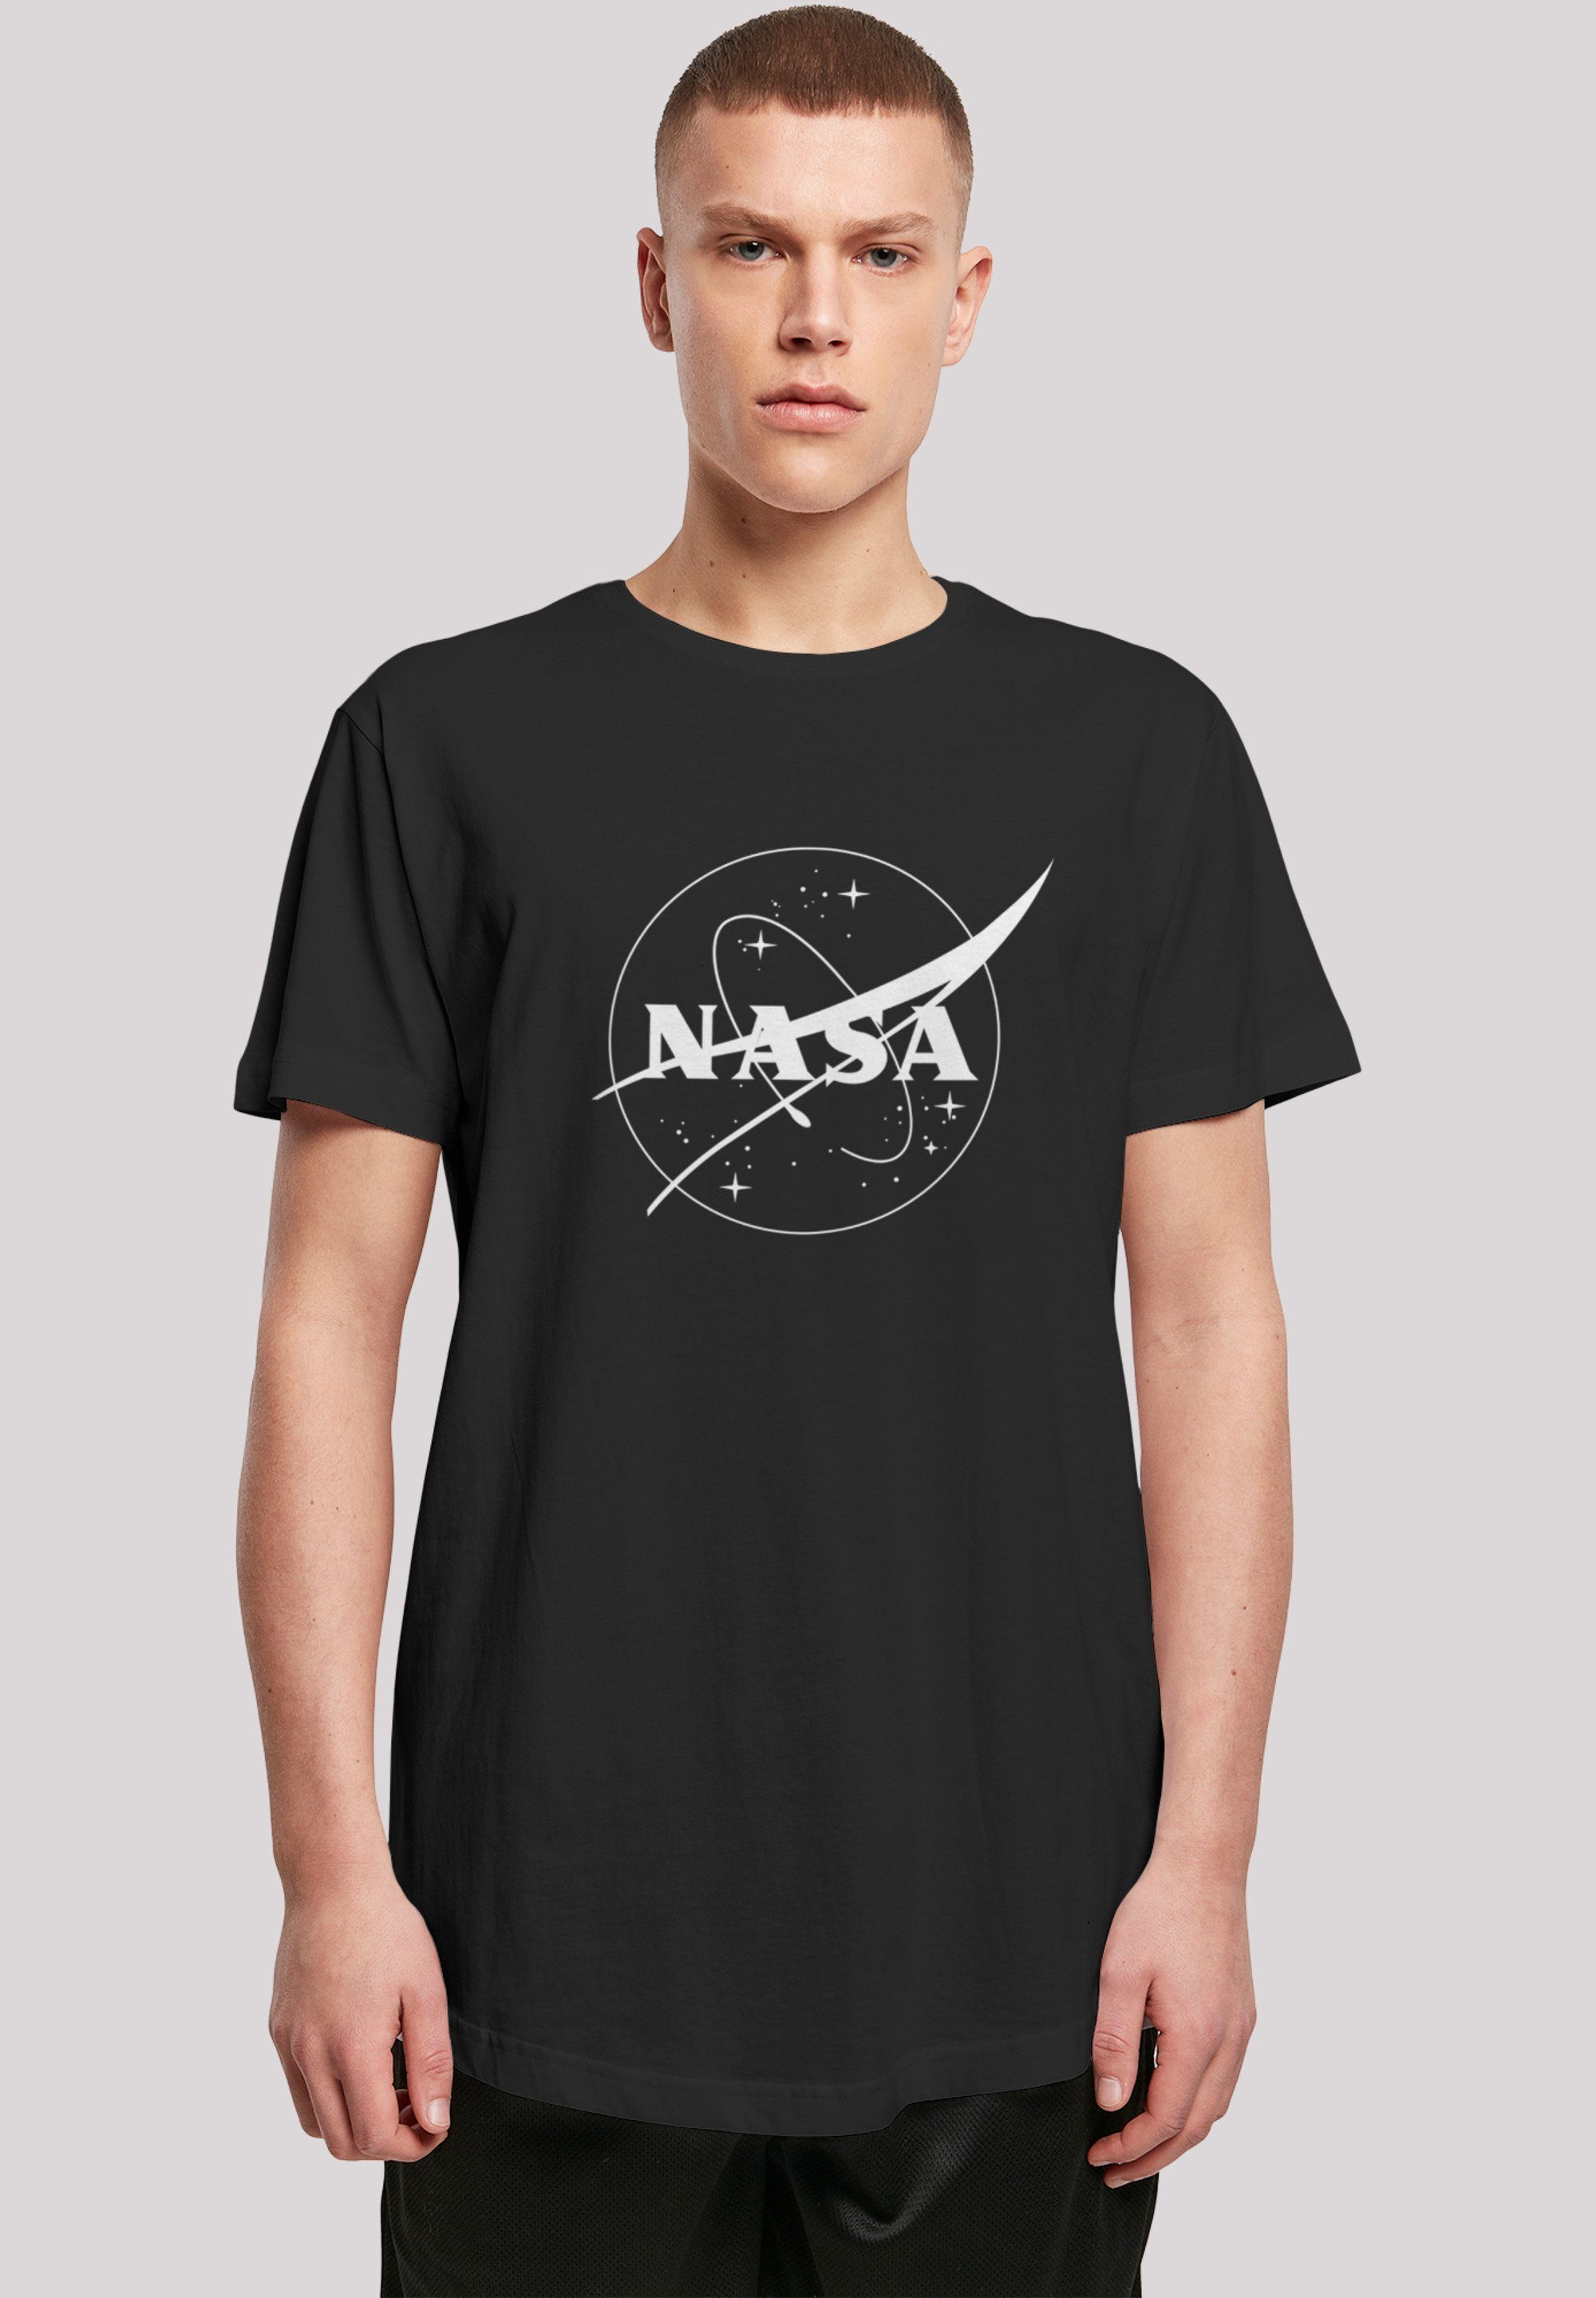 Sehr \'NASA Monochrome\' T-Shirt Cut Long Insignia Tragekomfort F4NT4STIC mit Logo Baumwollstoff Print, Classic T-Shirt hohem weicher